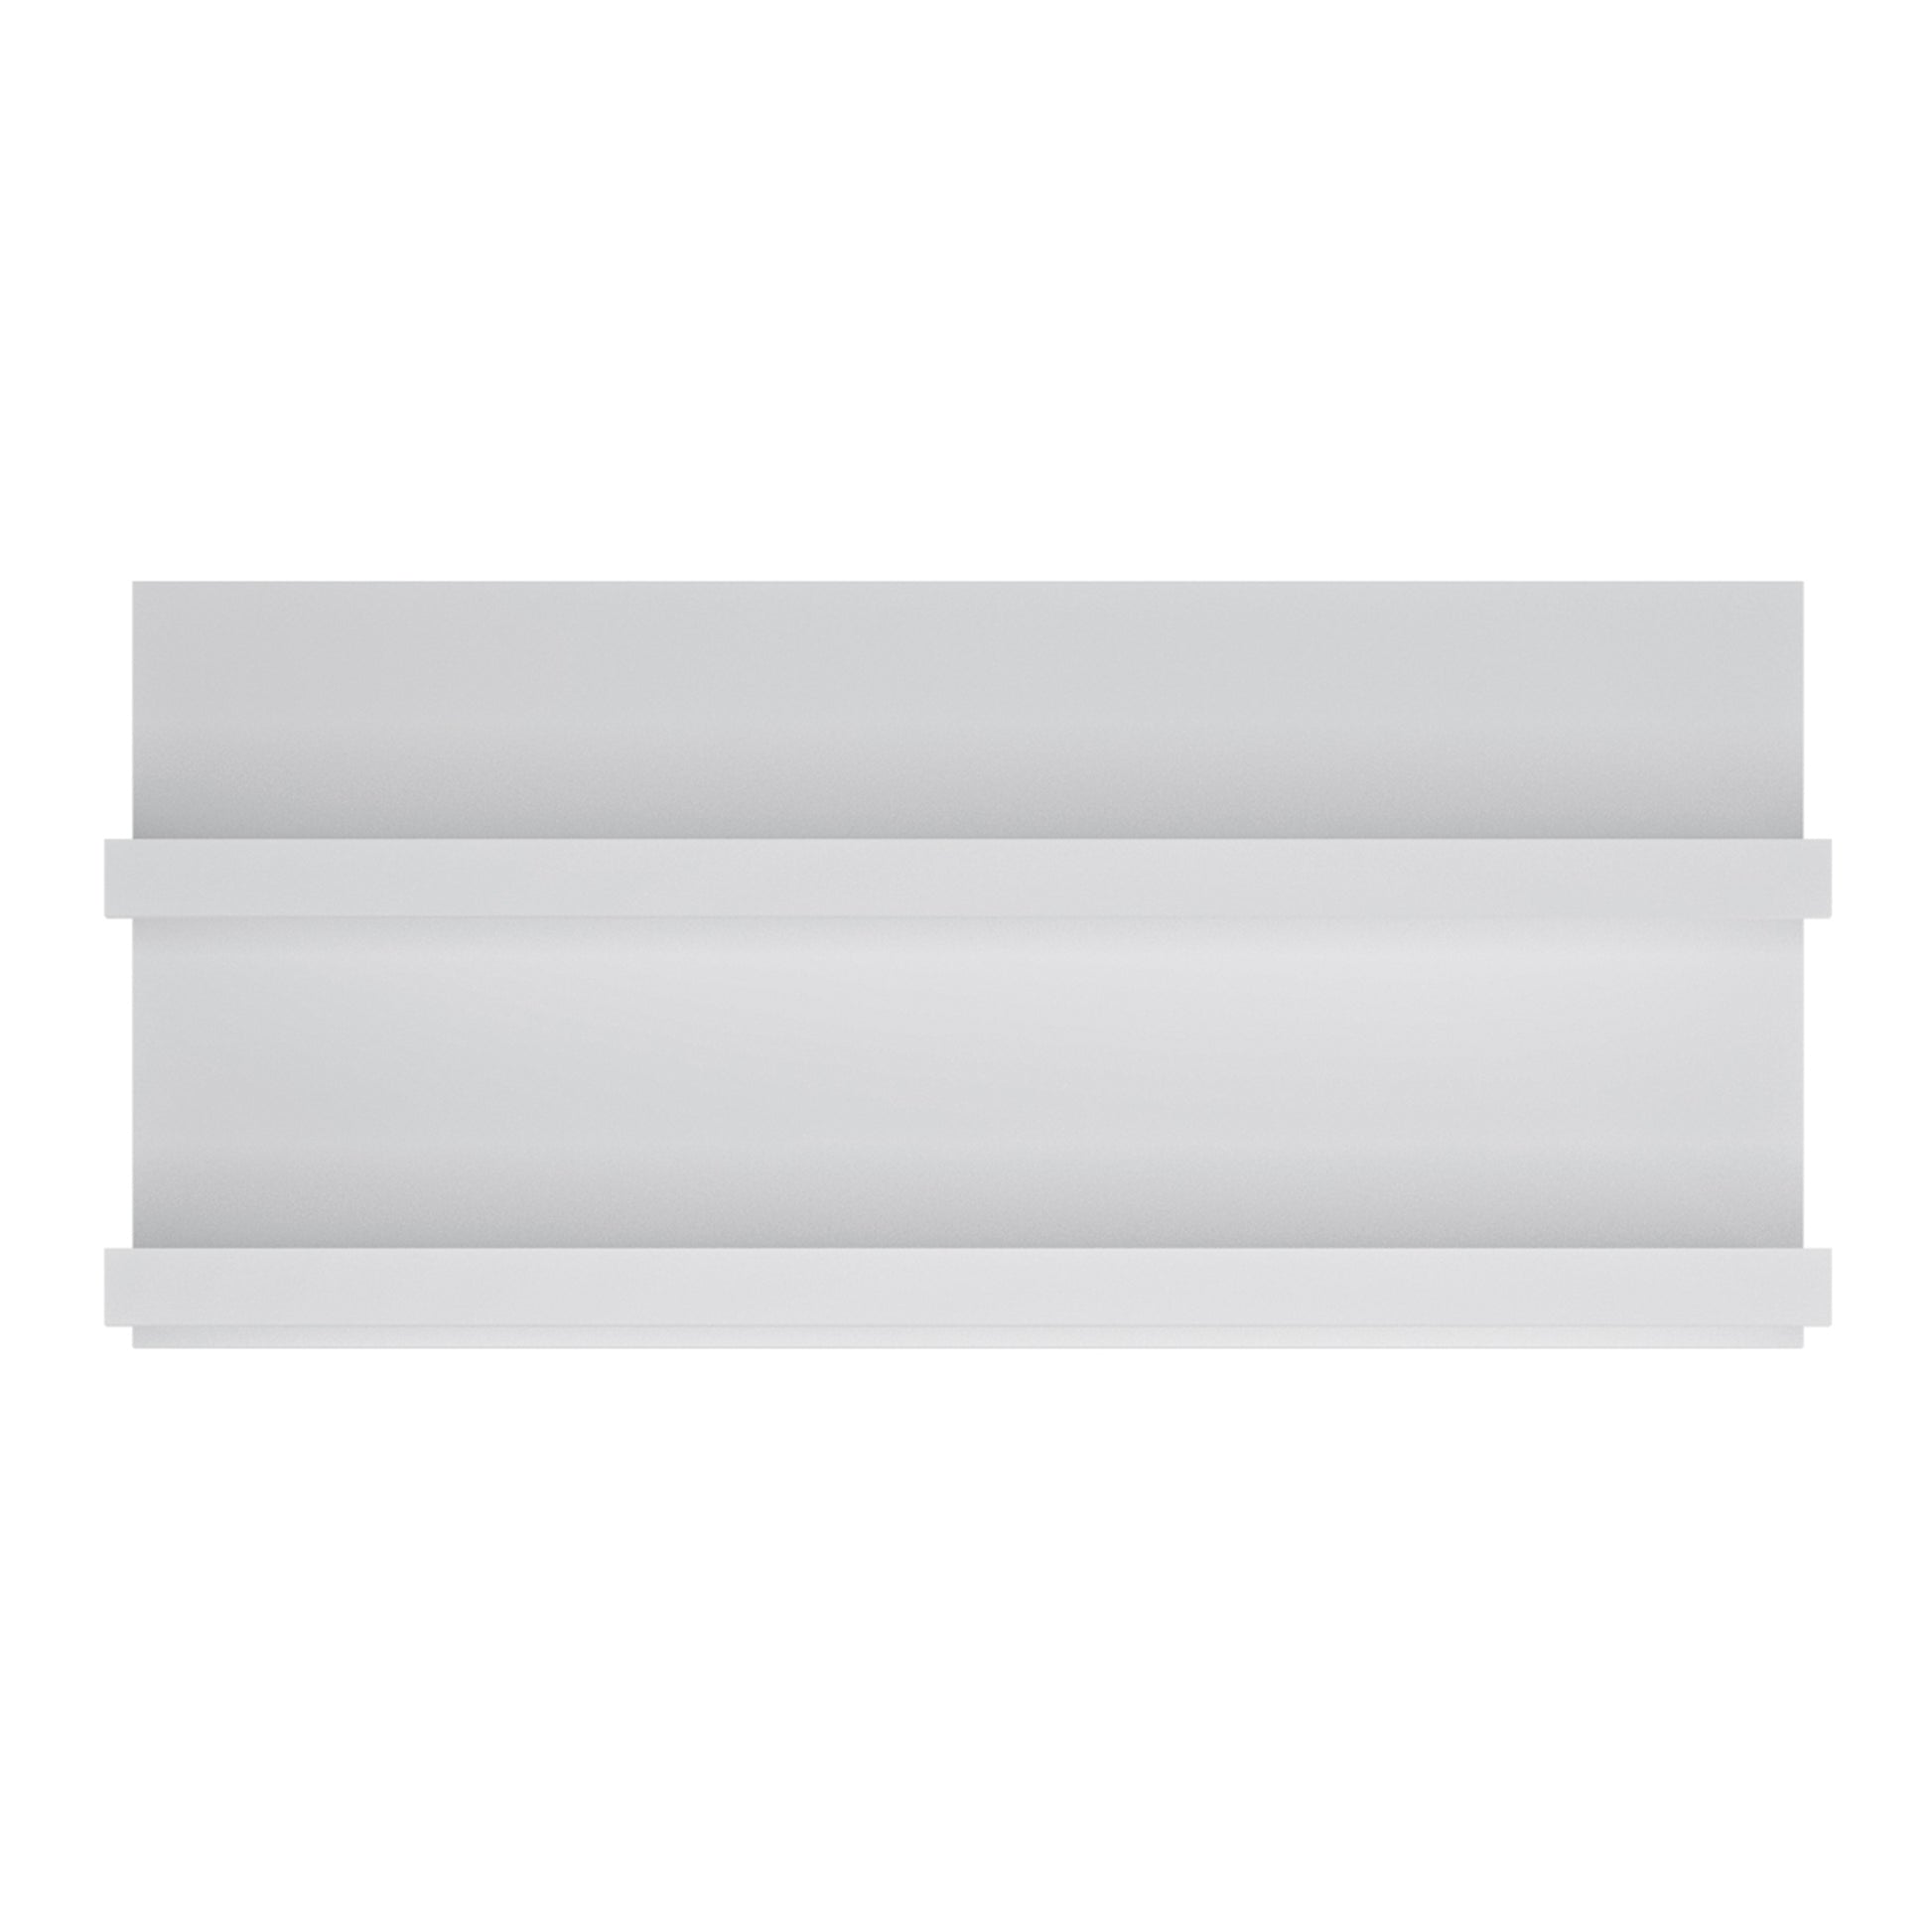 Fribo White Fribo 136 cm wide wall shelf in White